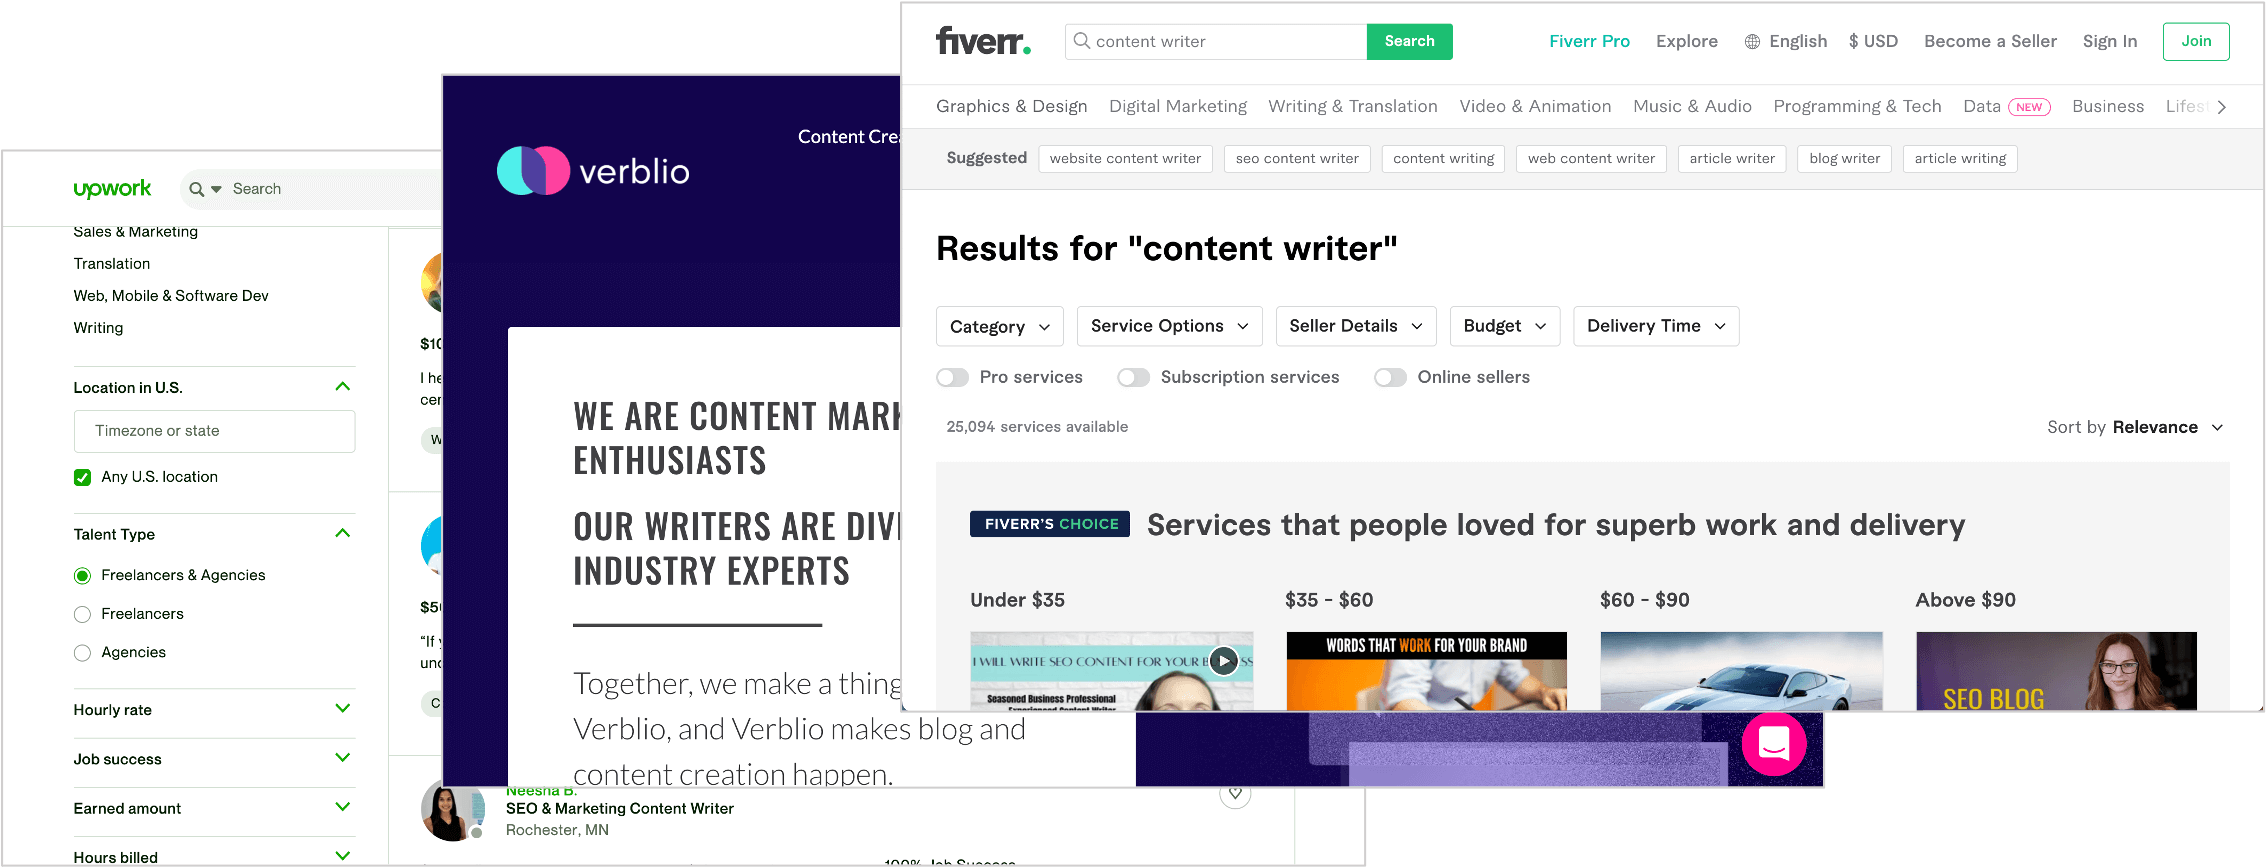 screenshots of various platforms for hiring content writers